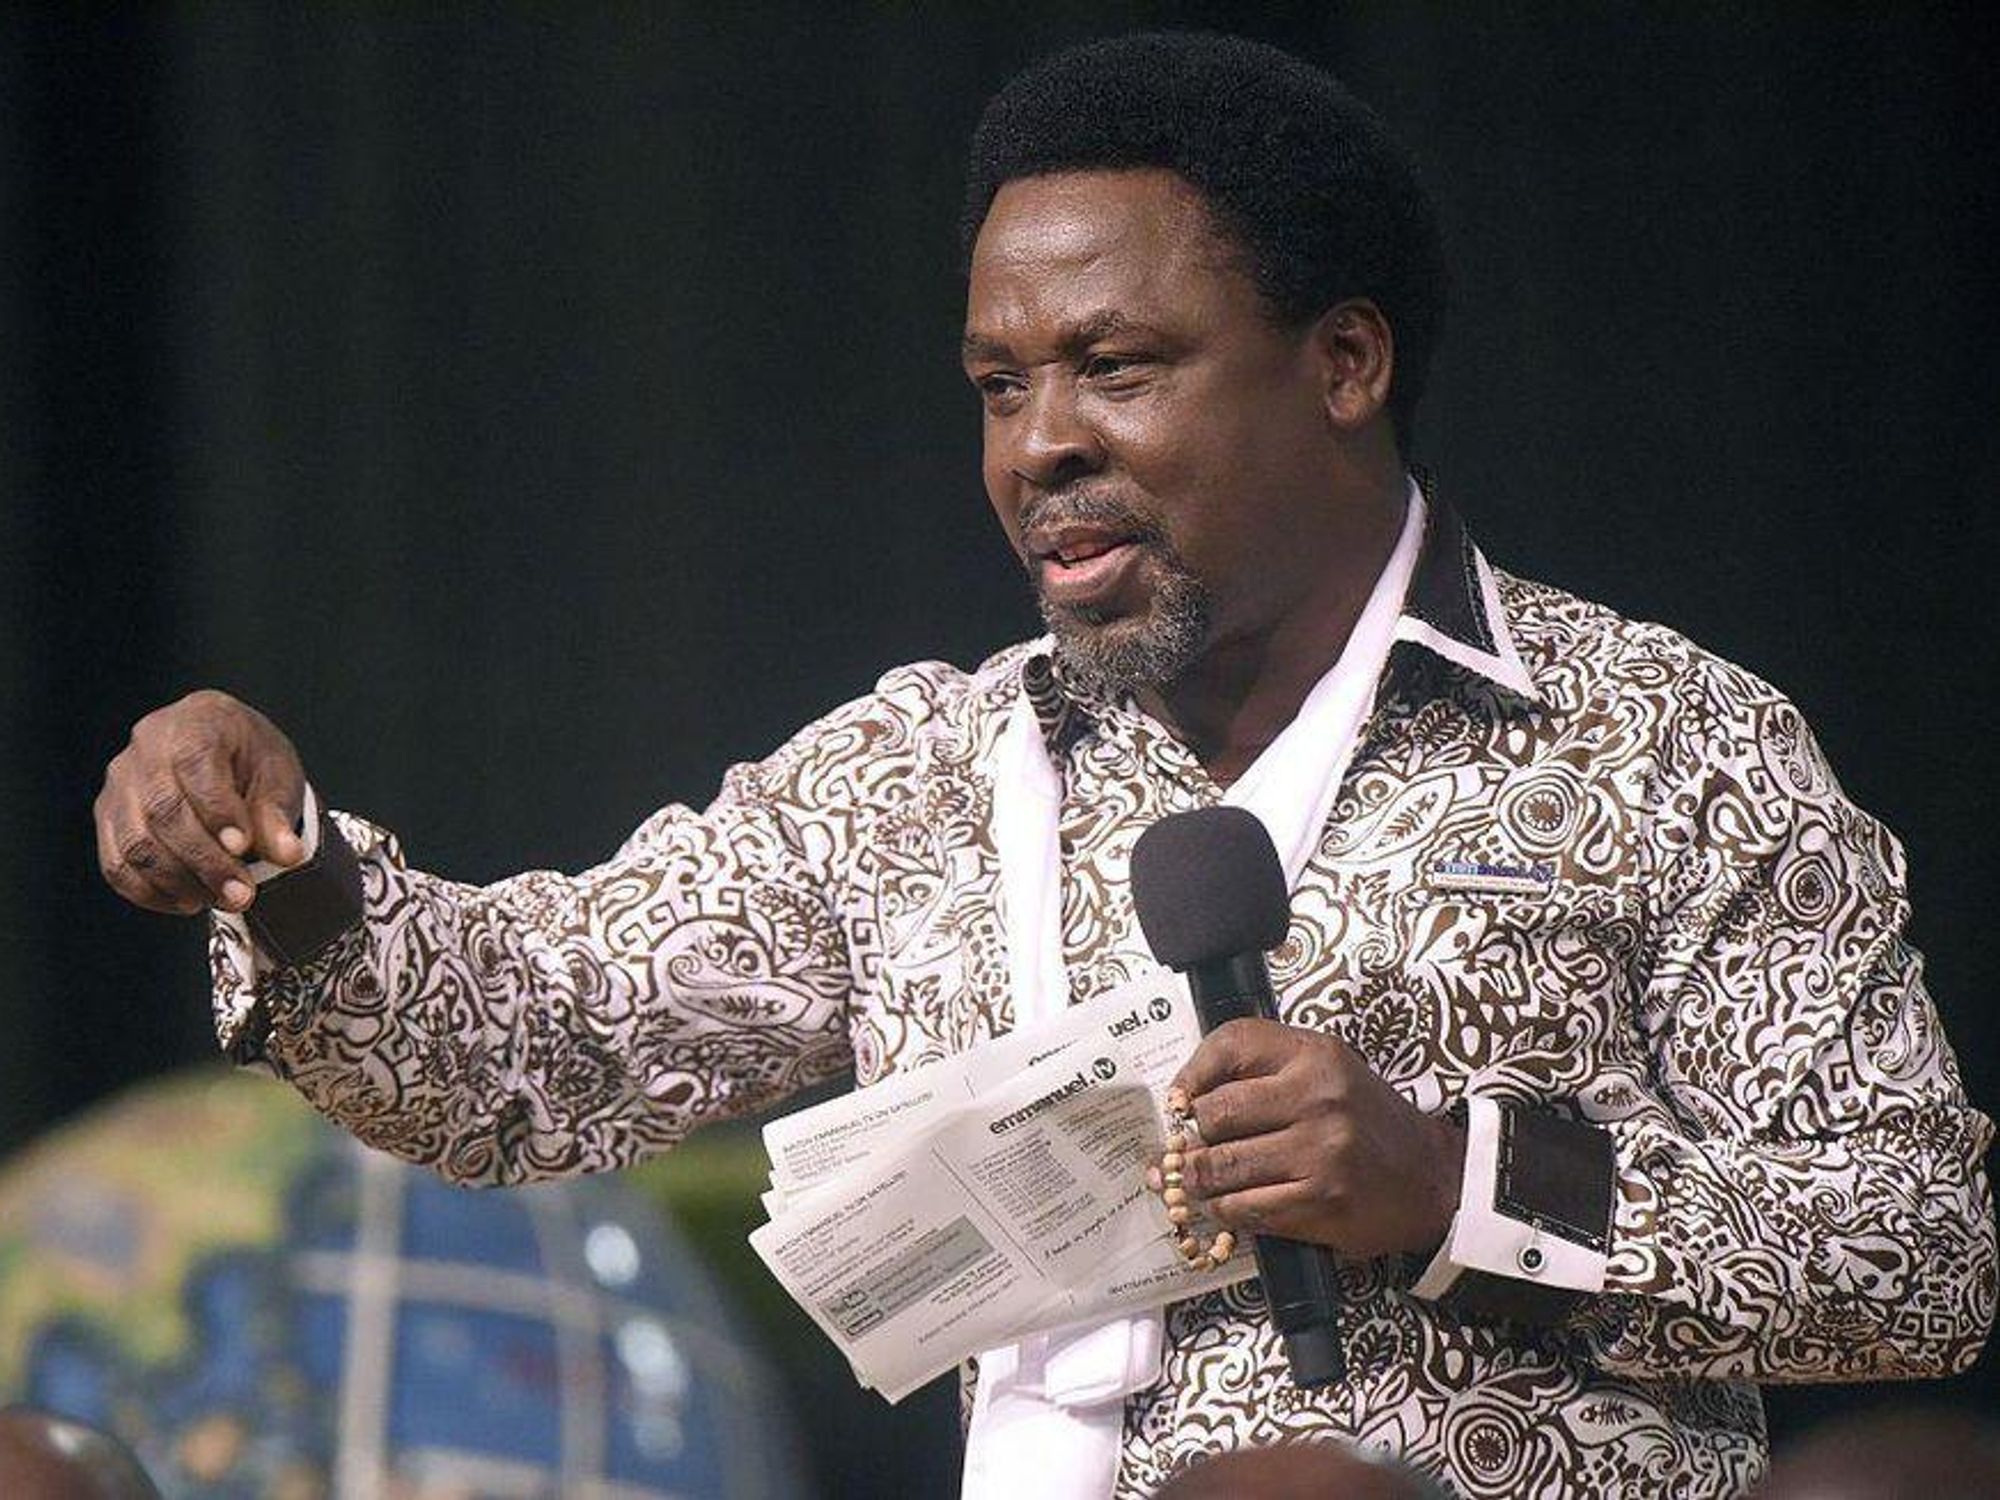 Nigerian Prophet And Televangelist TB Joshua Dies